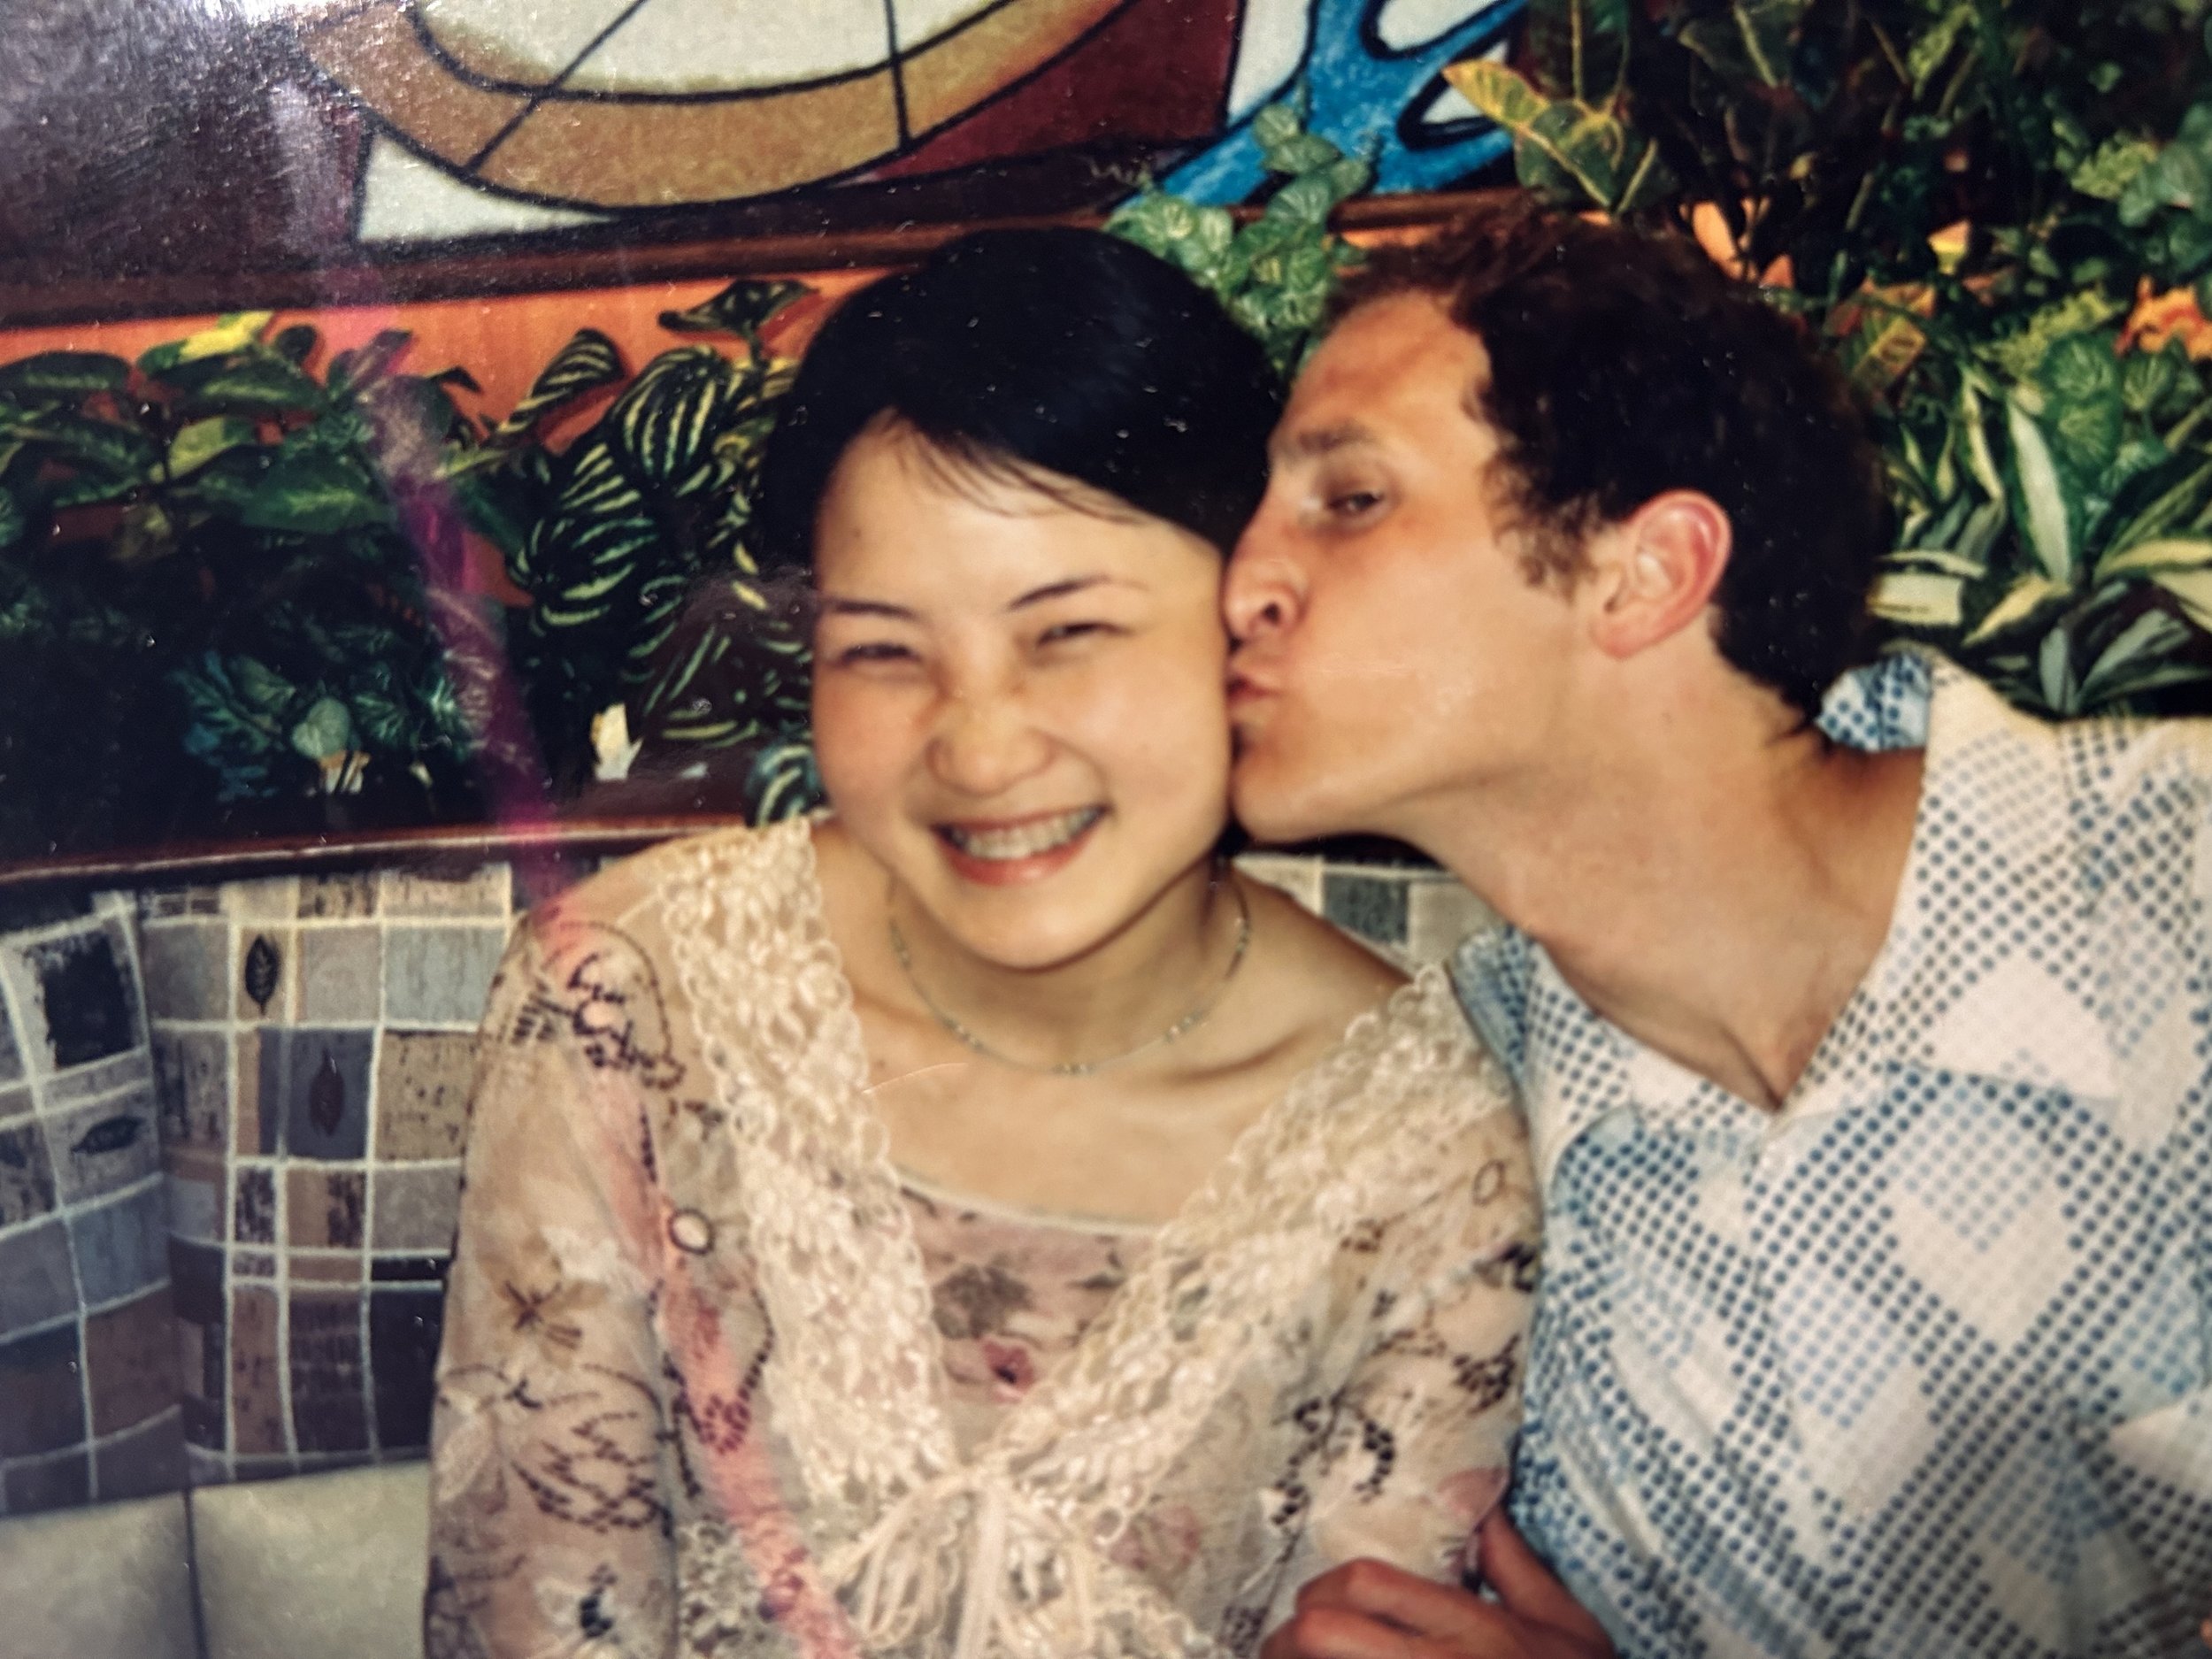 Early 2004 dating scene in Chengdu, China. David and Fan-Fan.